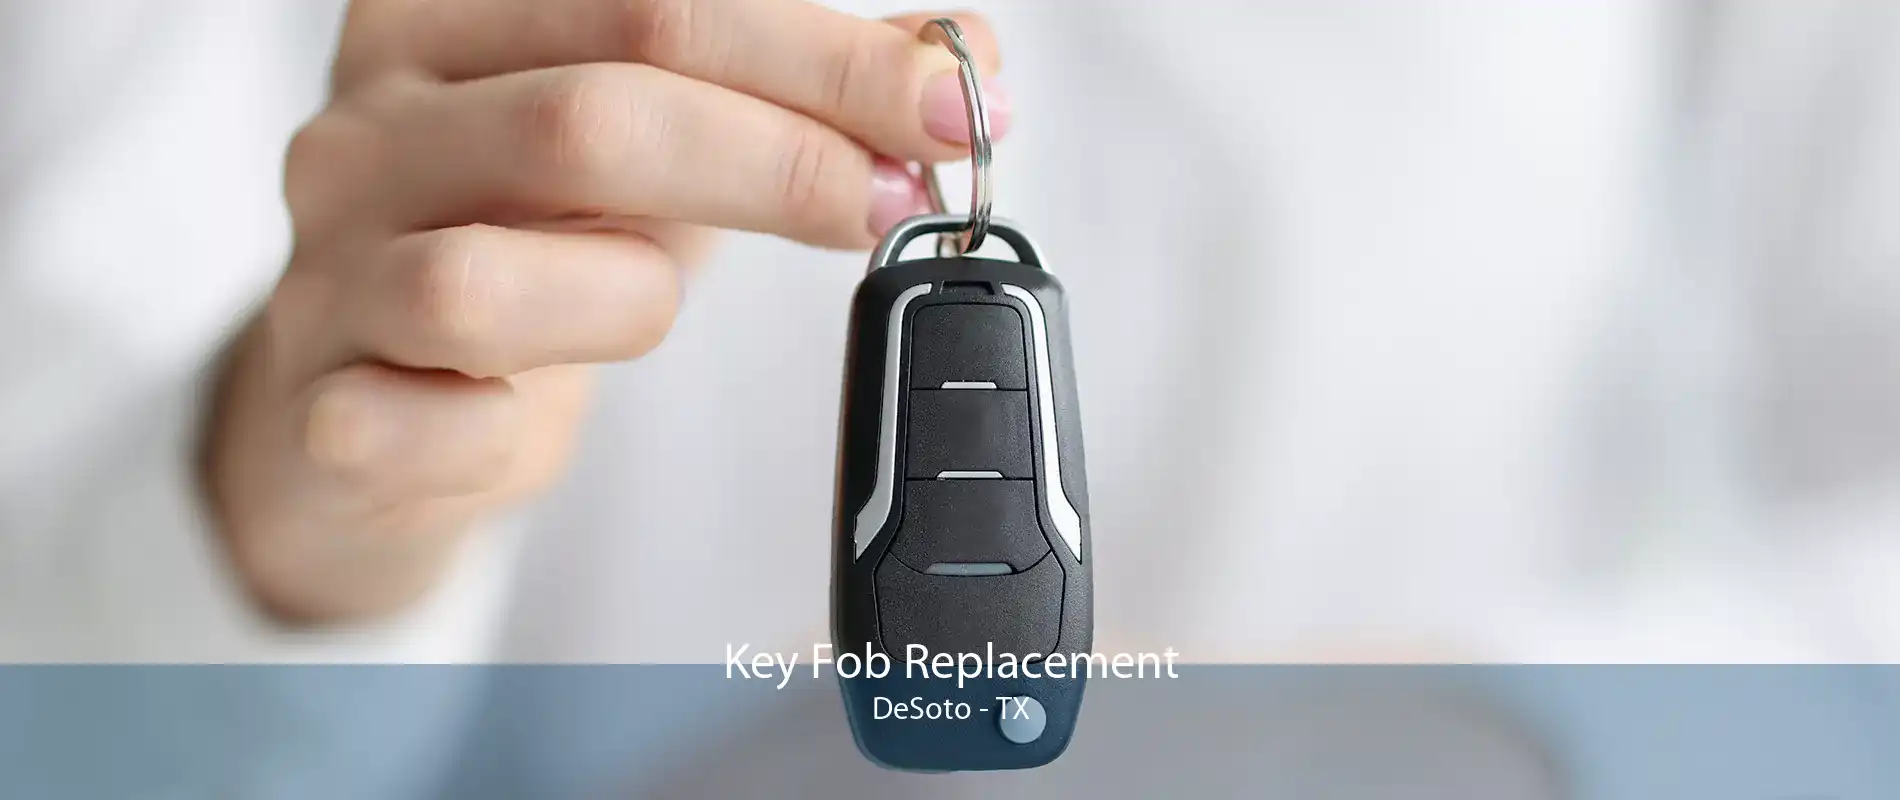 Key Fob Replacement DeSoto - TX